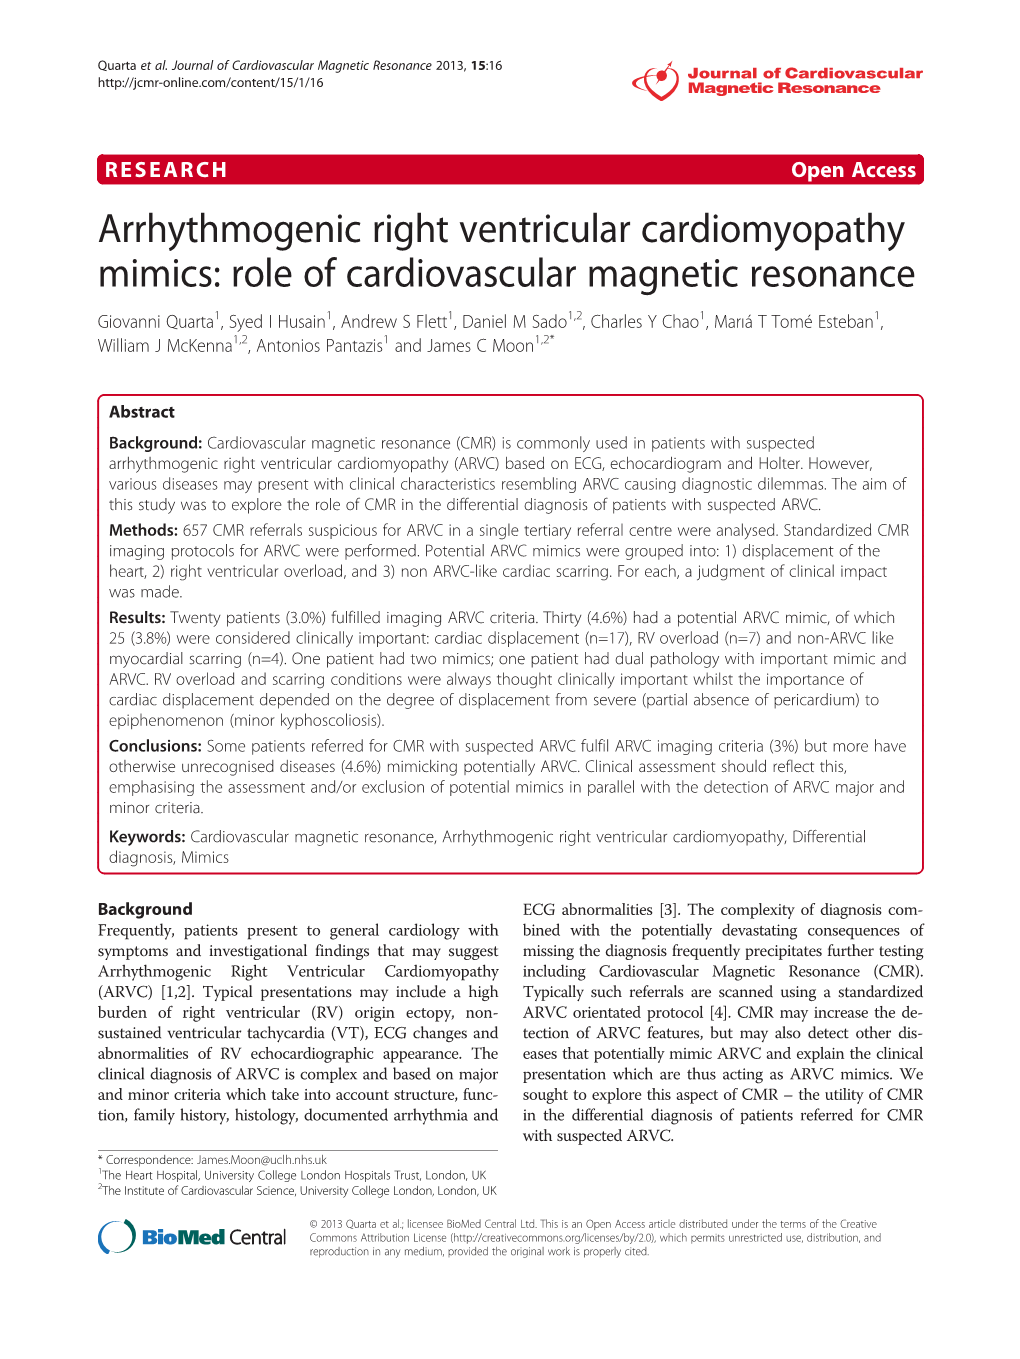 Arrhythmogenic Right Ventricular Cardiomyopathy Mimics